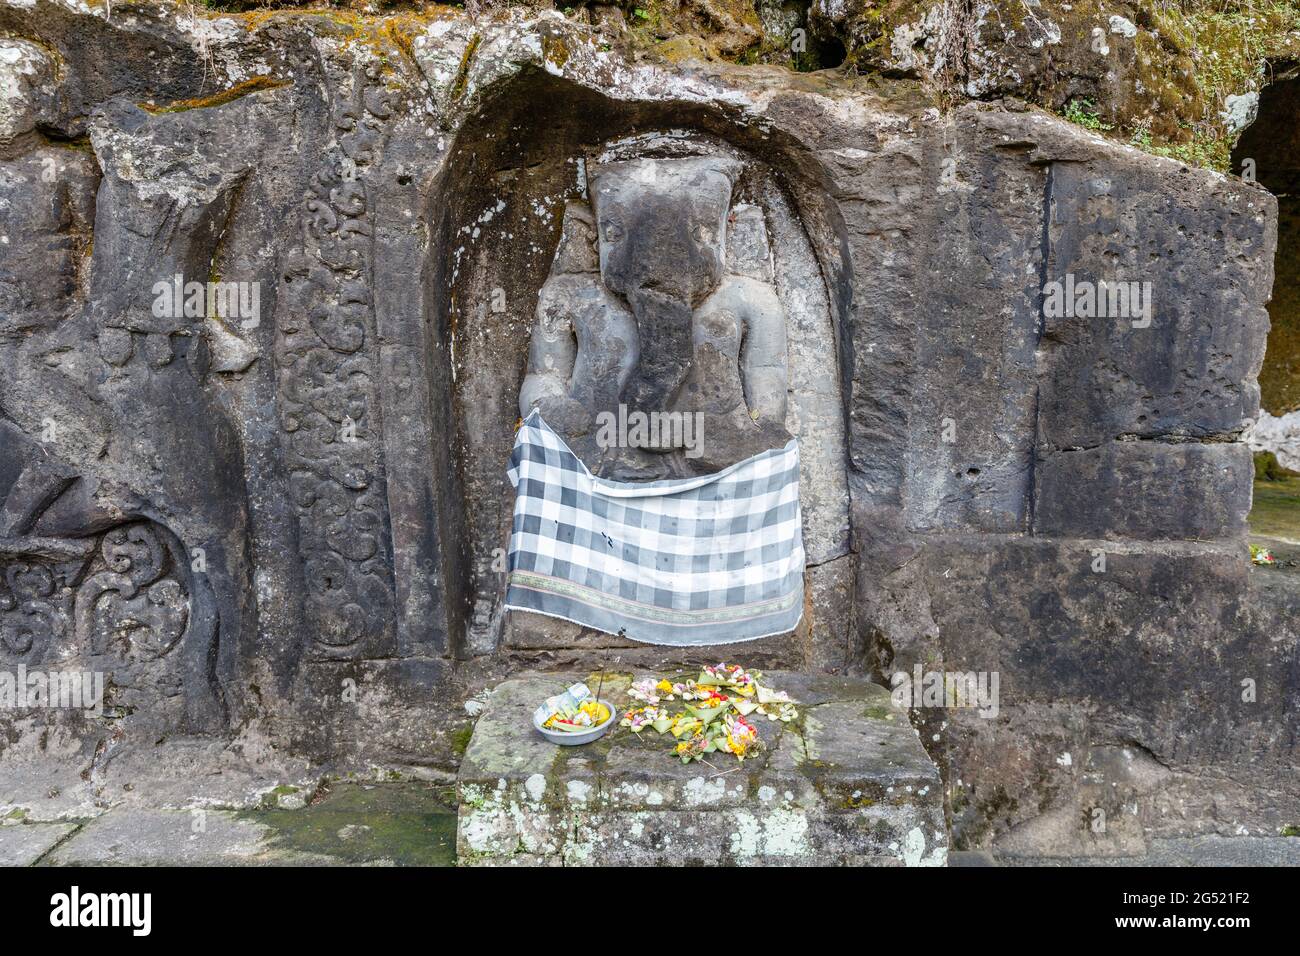 Yeh Pulu - Ancient relief in Desa Bedulu, Kabupaten Gianyar, Bali, Indonesia. Carving in the rock wall. Stock Photo